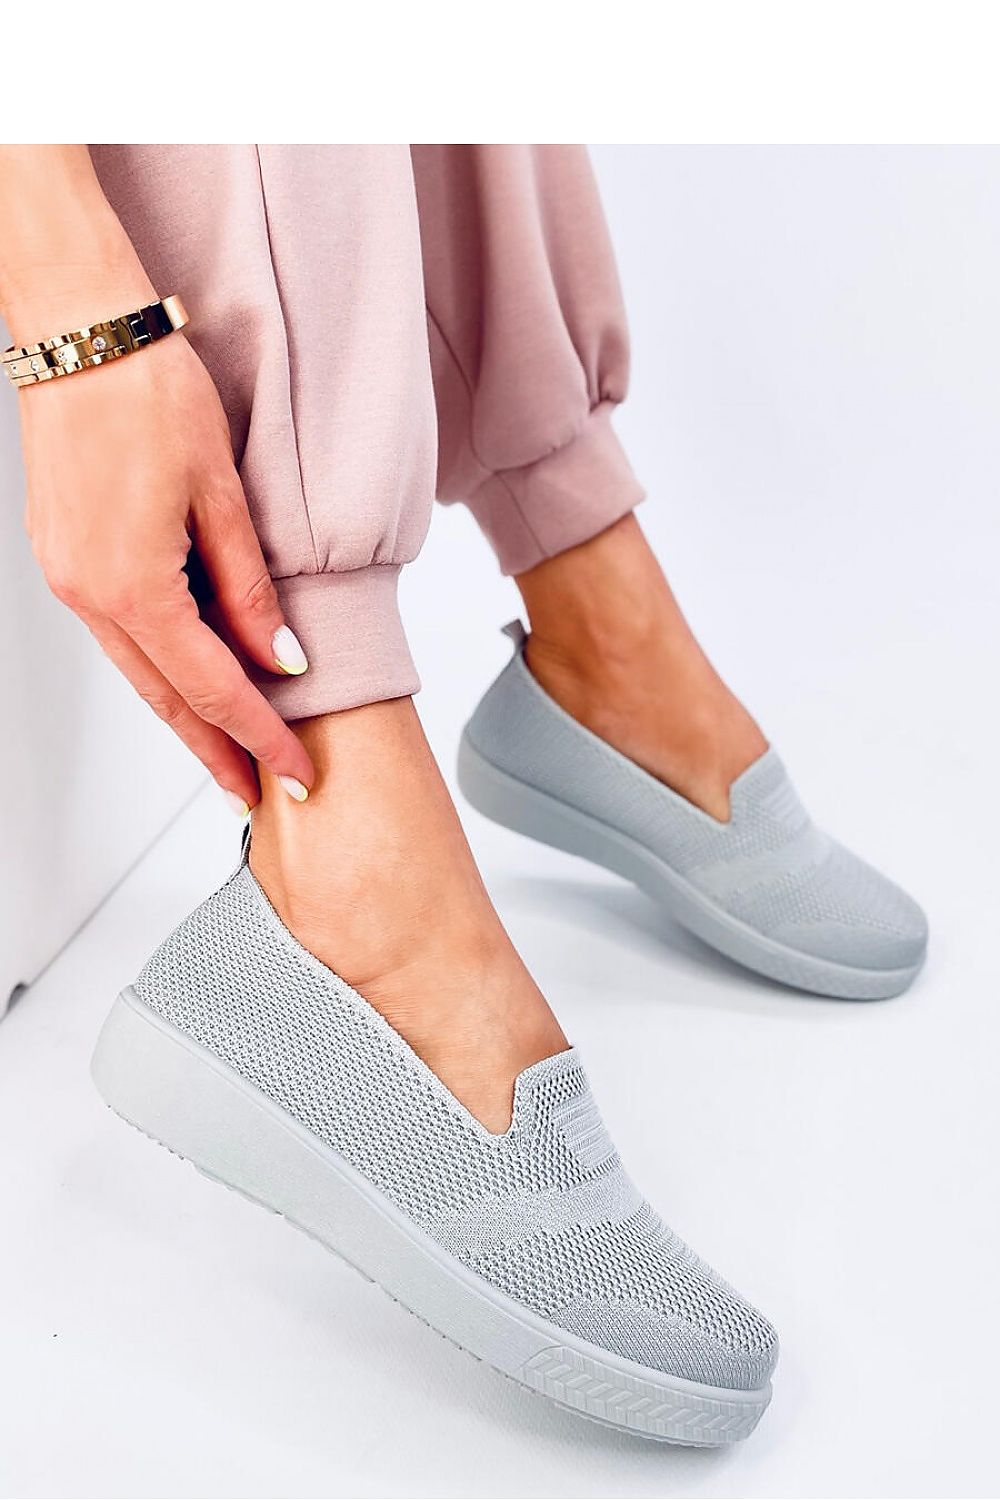 TEEK - Grey Slip-On Fabric Loafers SHOES TEEK MH 6  